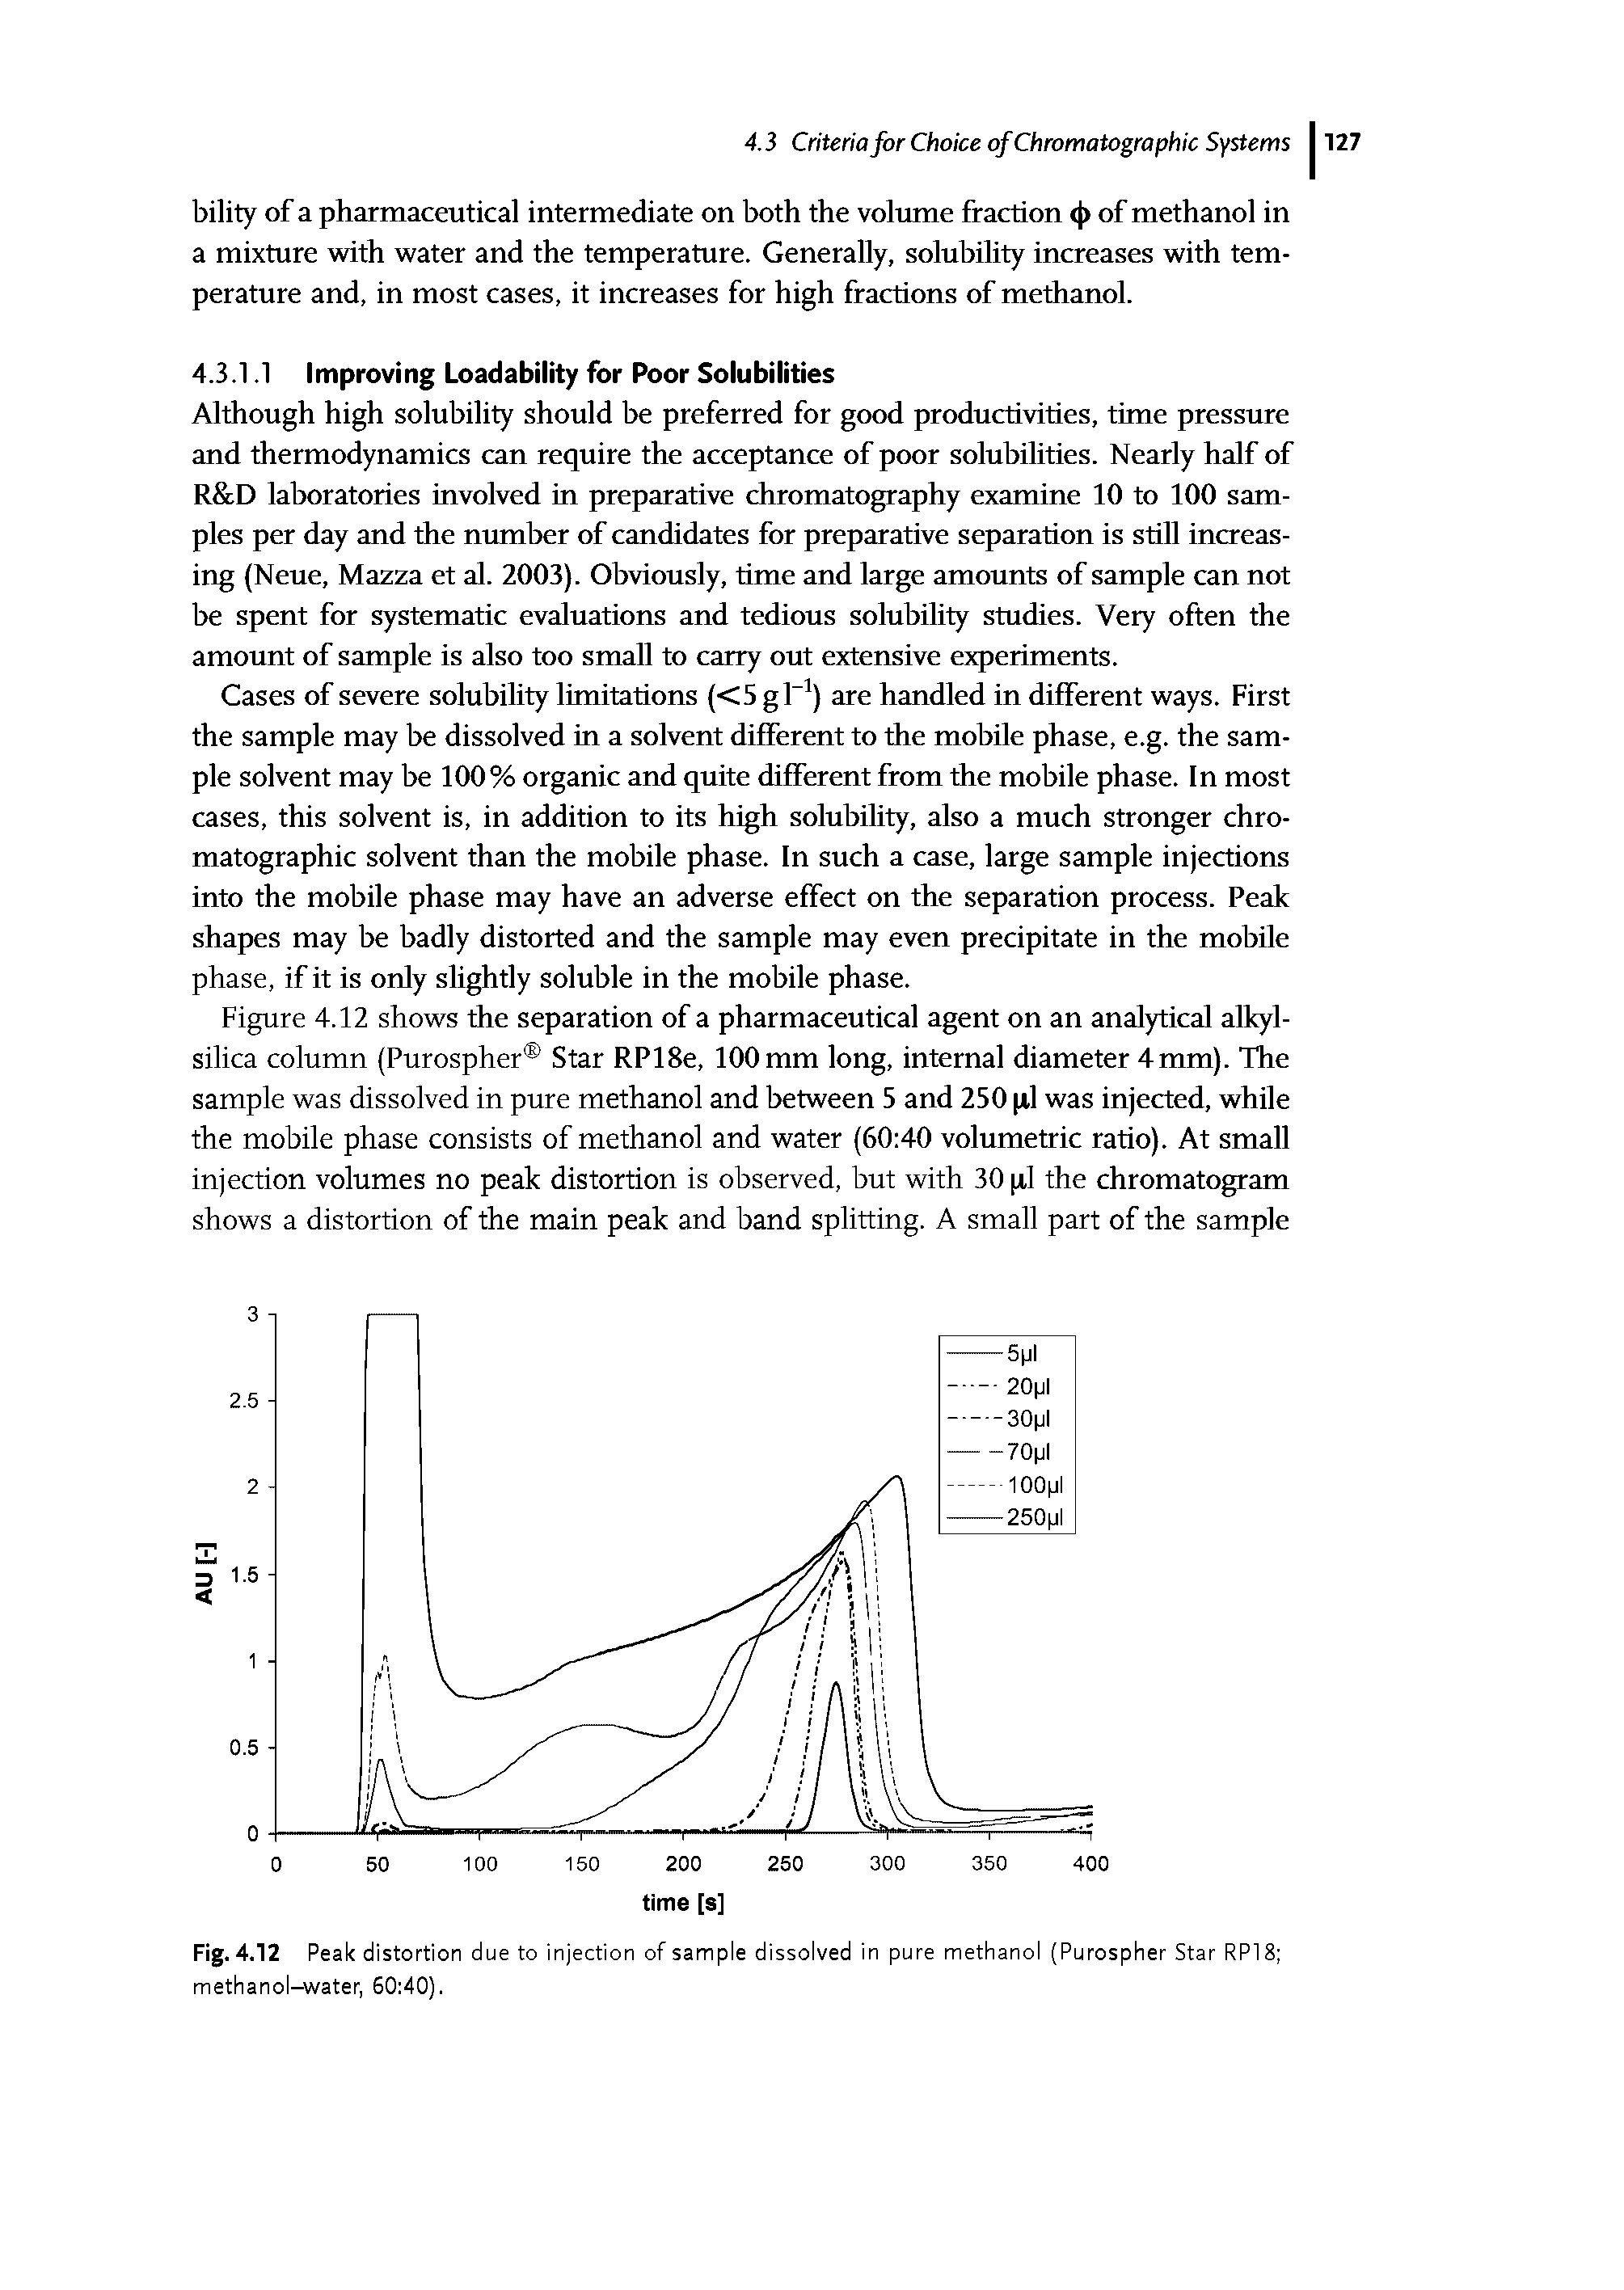 Fig. 4.12 Peak distortion due to injection of sample dissolved in pure methanol (Purospher Star RP18 methanol-water, 60 40).